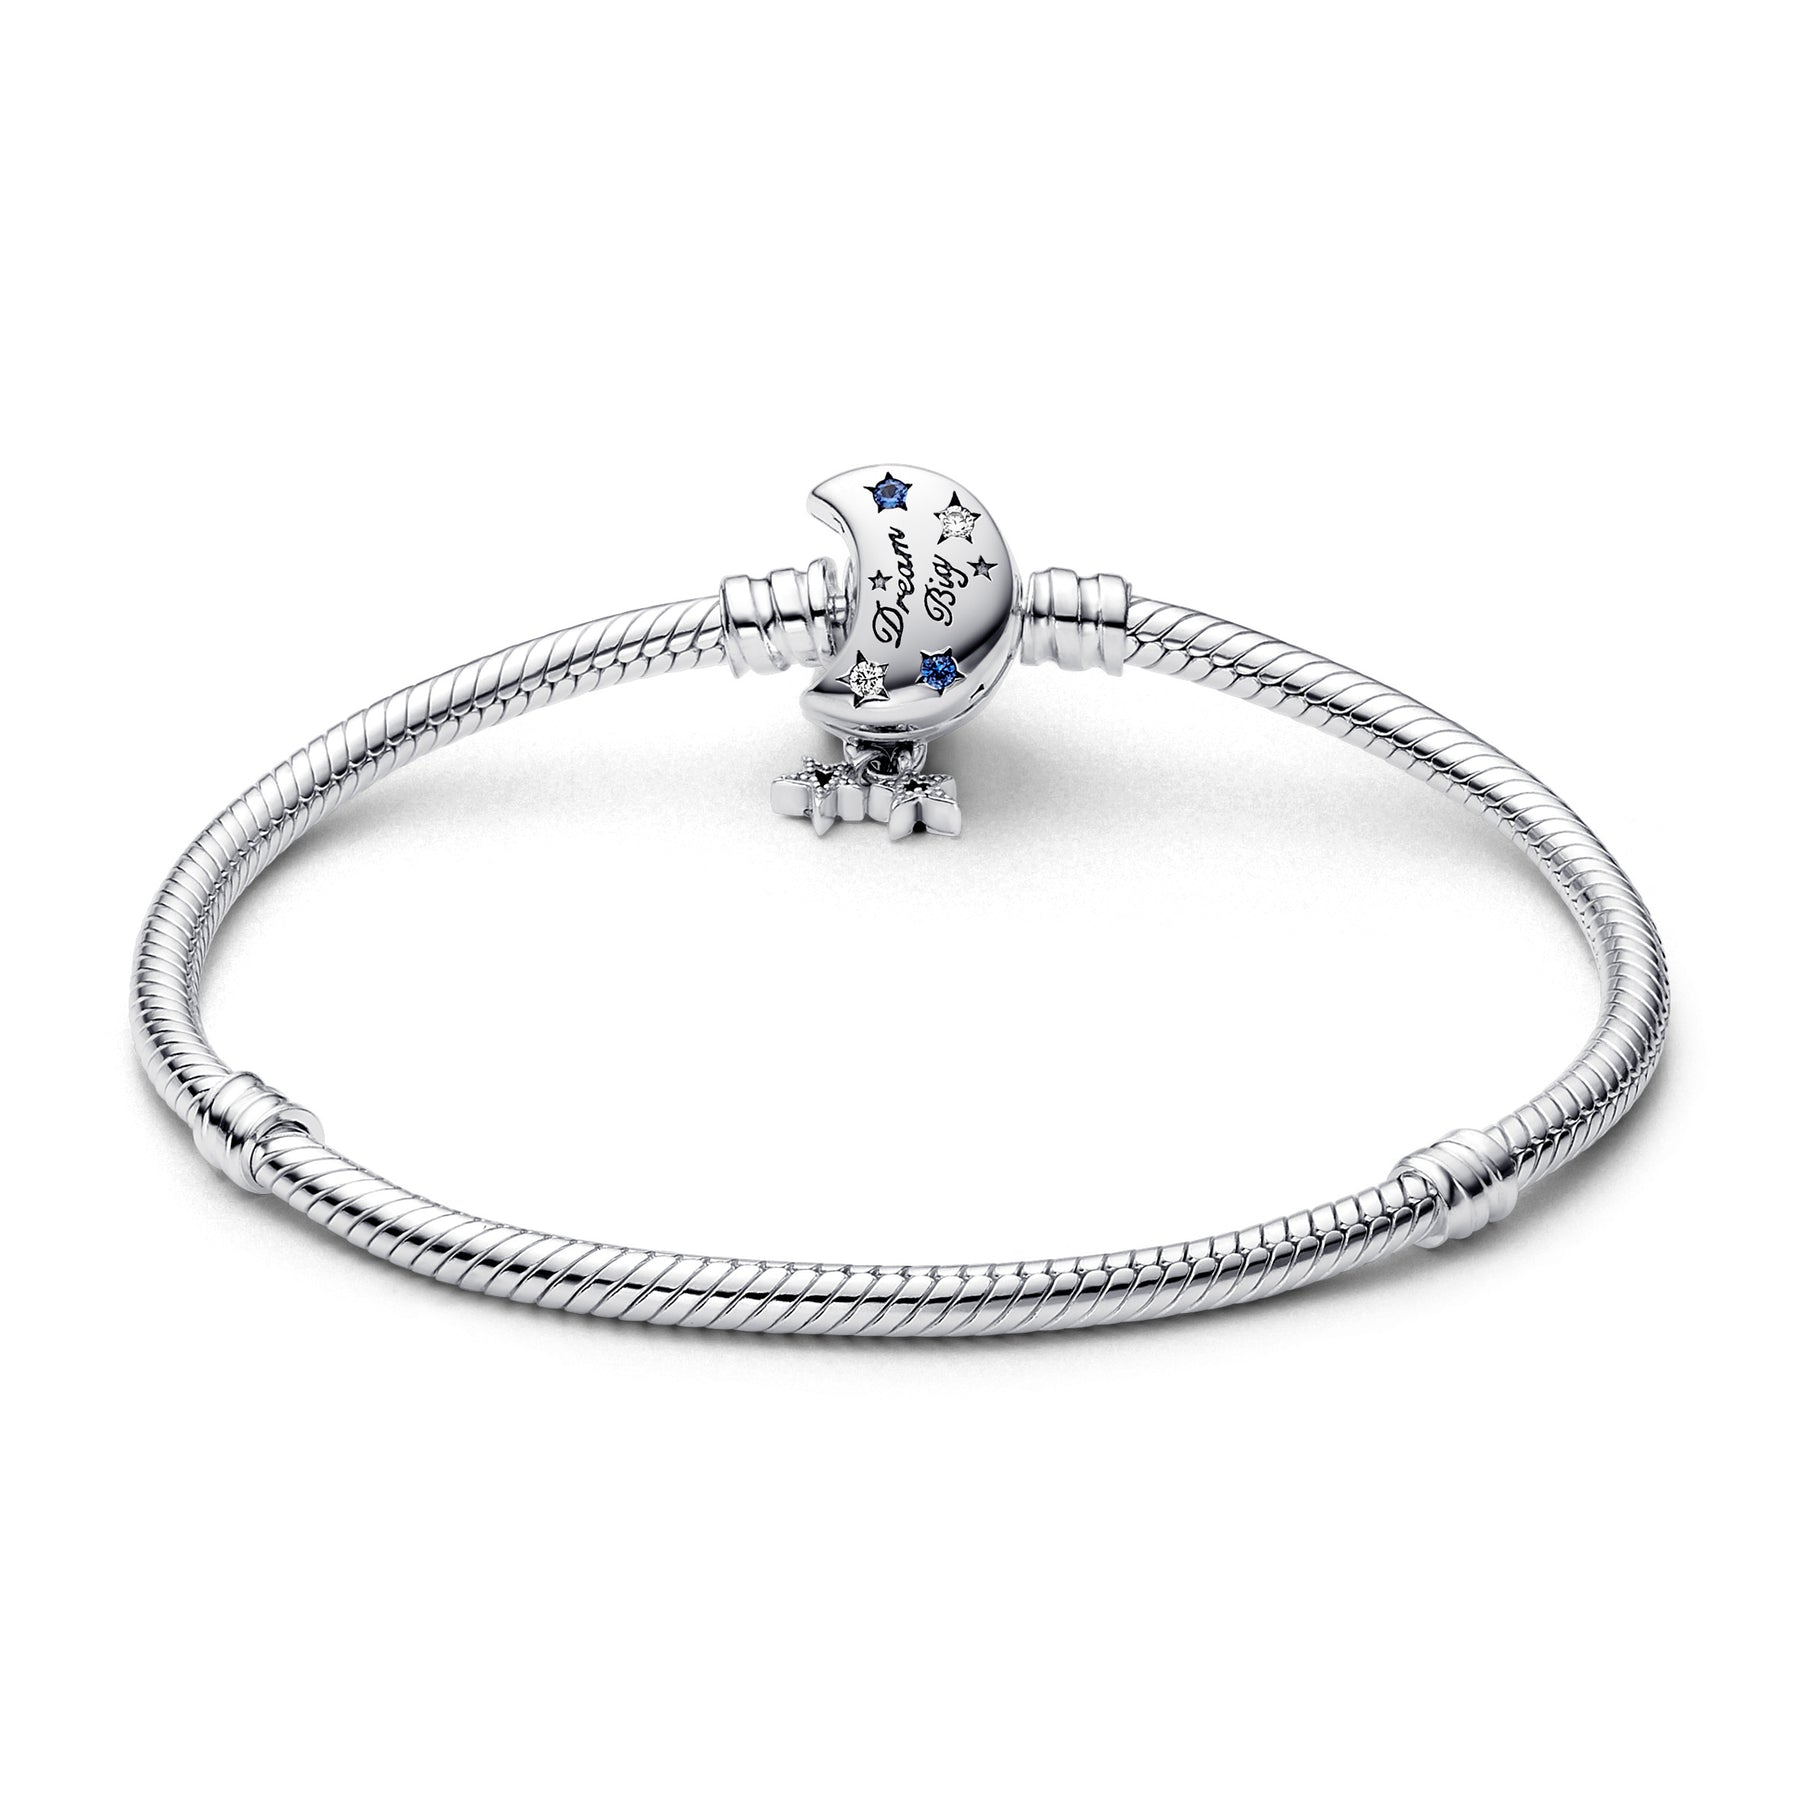 That spring clean sparkle ✨😍🙌 #shorts #Pandora #jewellery